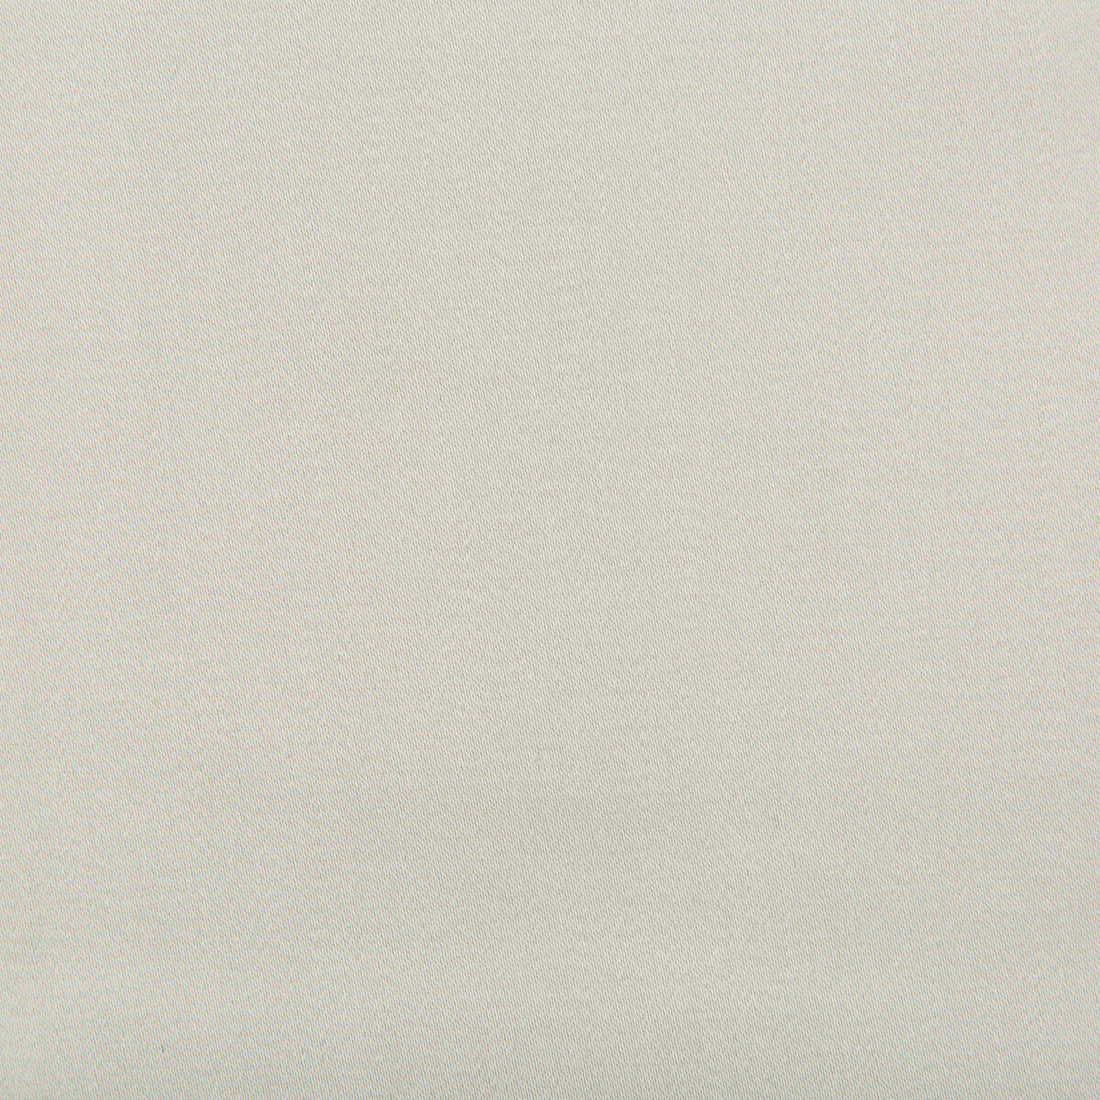 Manzanares fabric in plata color - pattern LCT5480.002.0 - by Gaston y Daniela in the Lorenzo Castillo IV collection